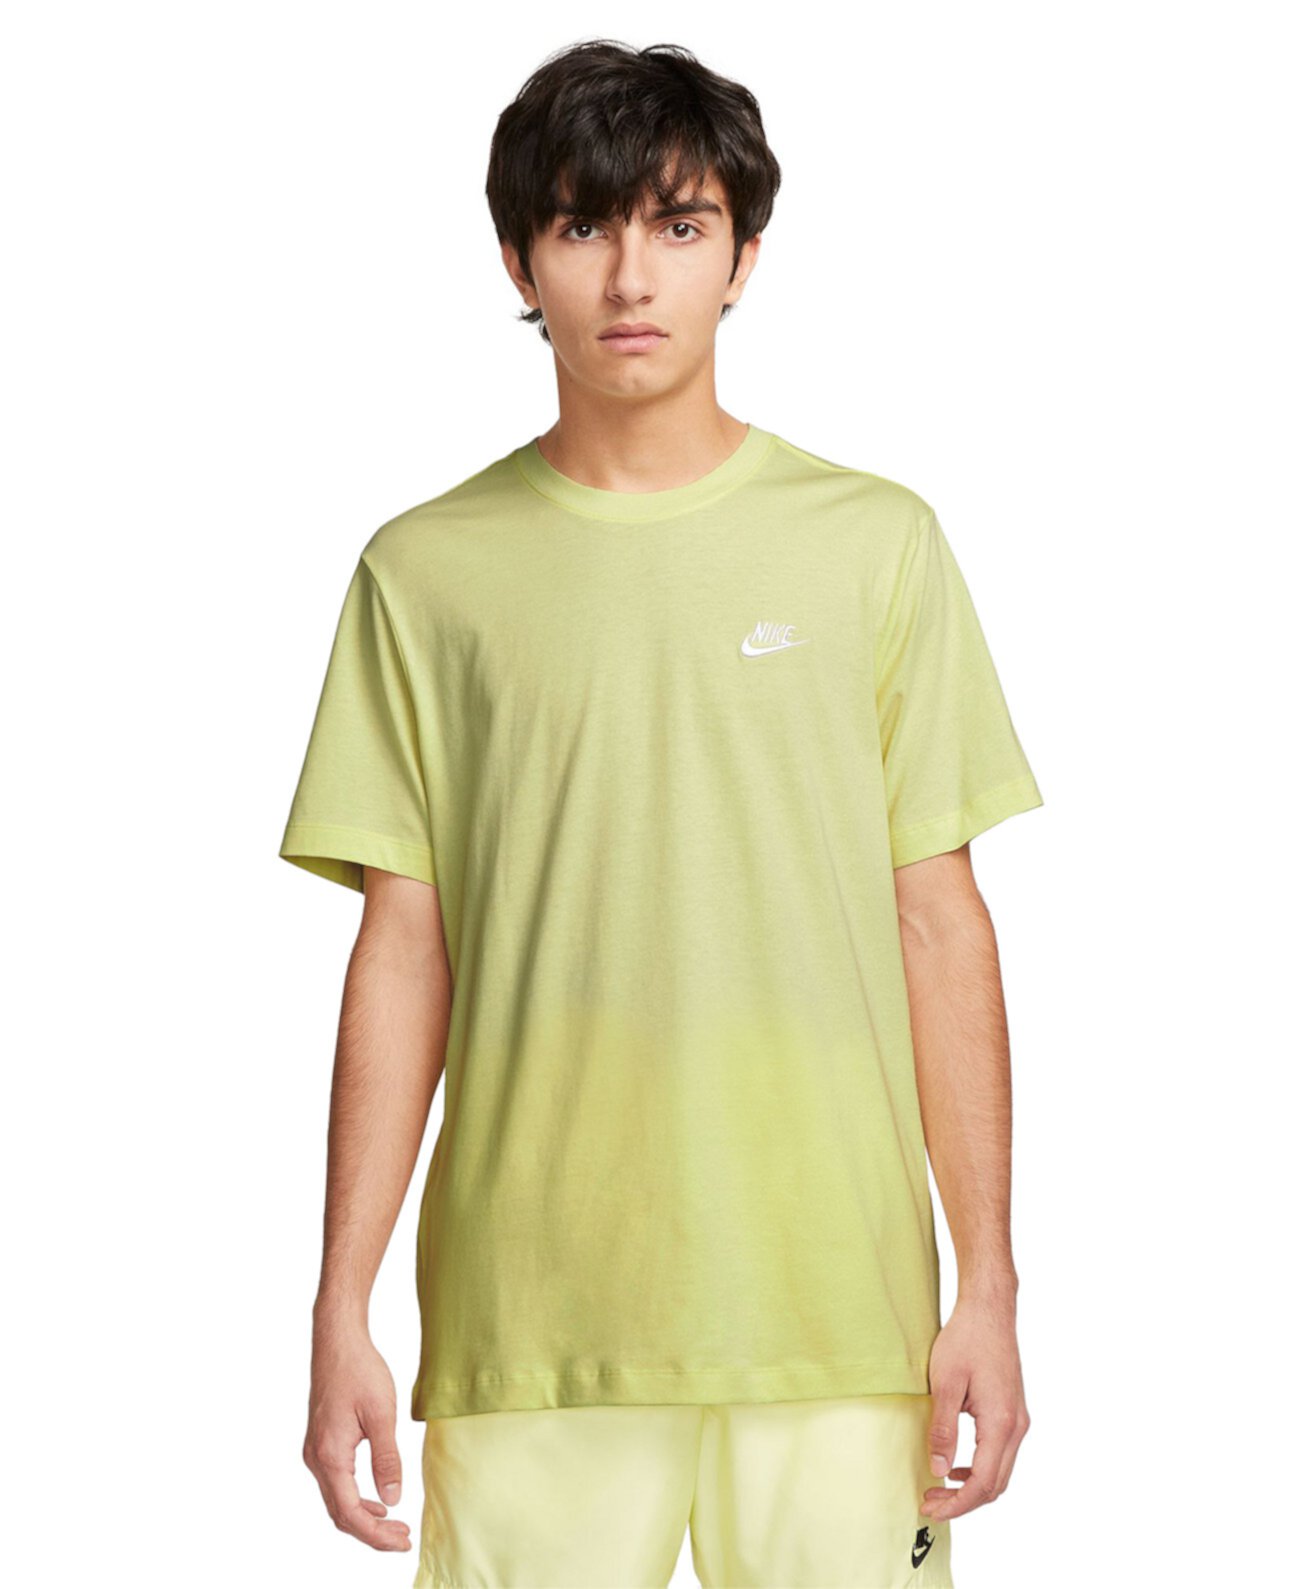 Men's Sportswear Club T-Shirt Nike